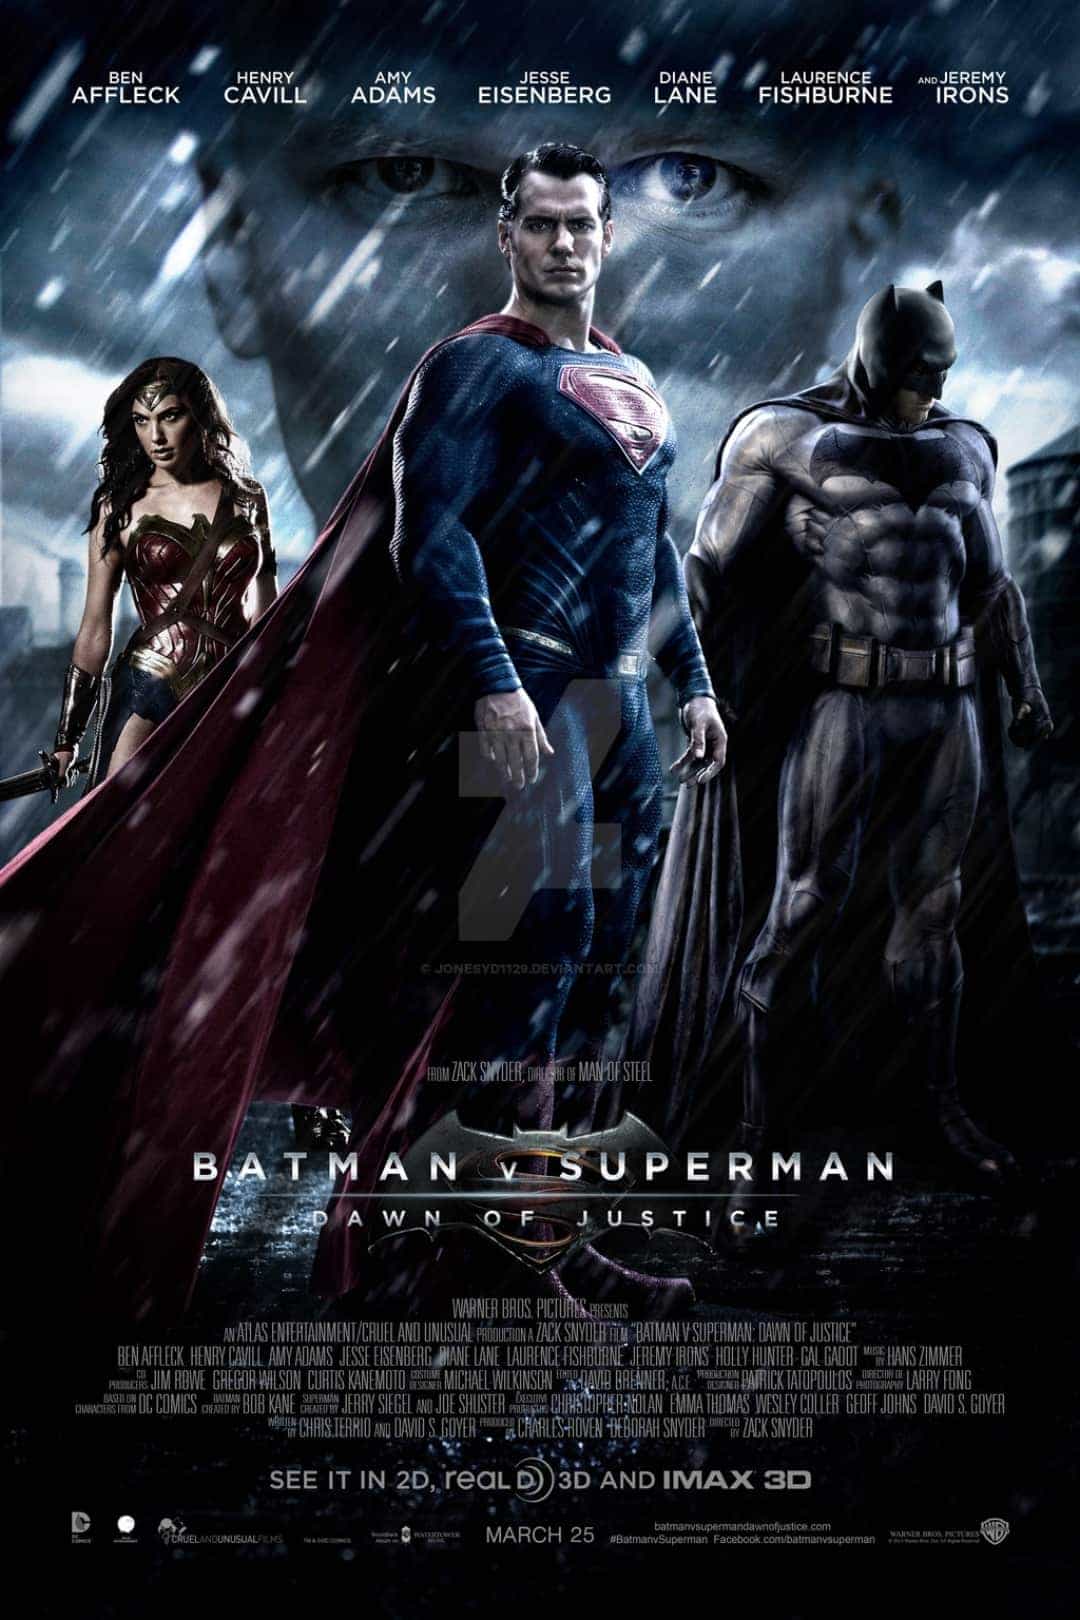 Final Batman V Superman trailer - roll on 25th March, we cant wait